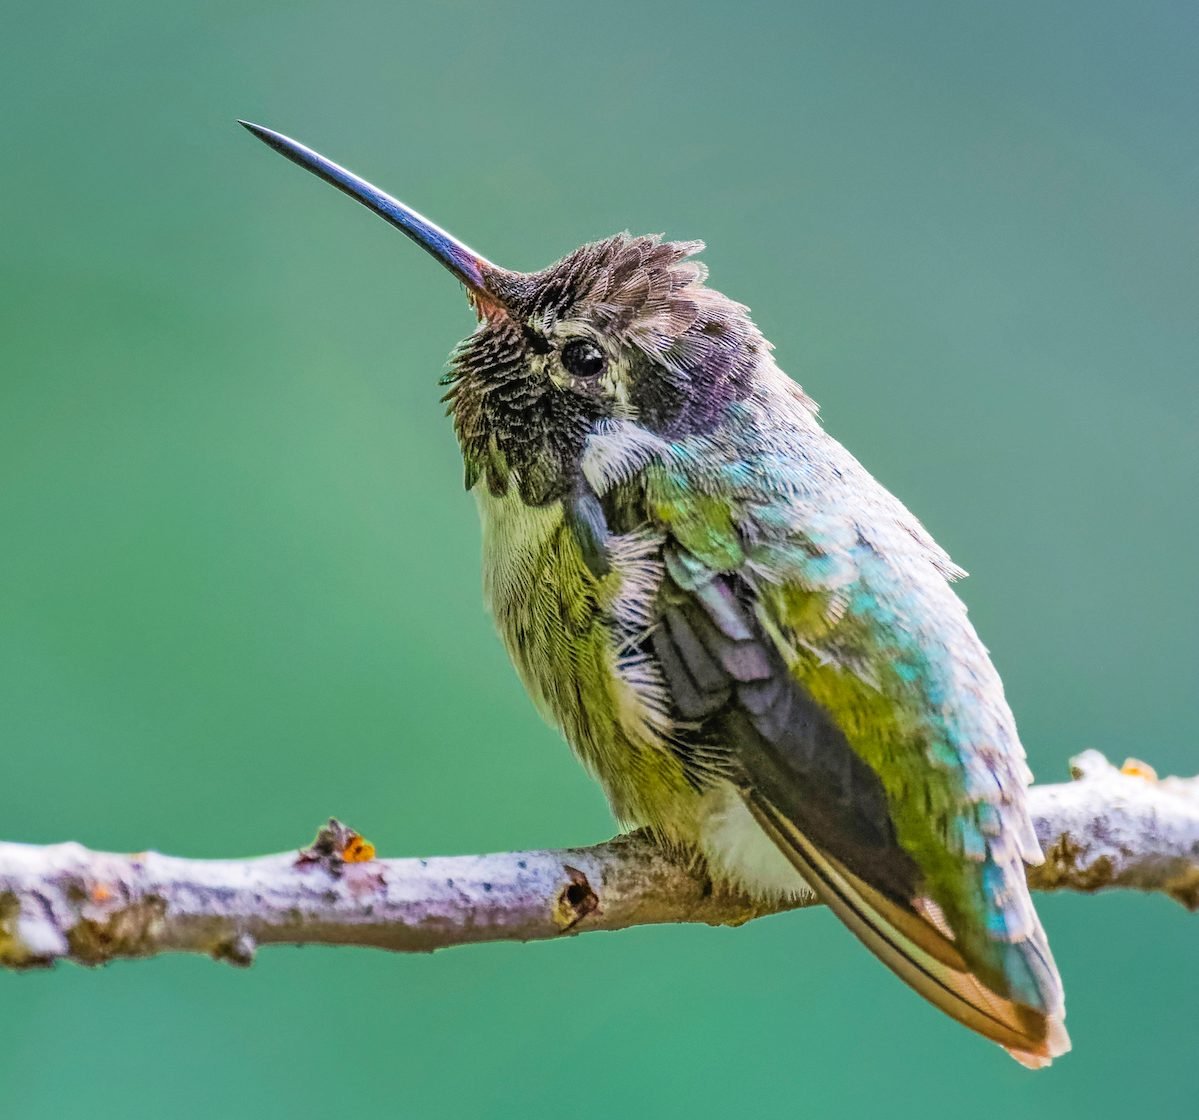 Hummingbird Size: How Much Does a Hummingbird Weigh?